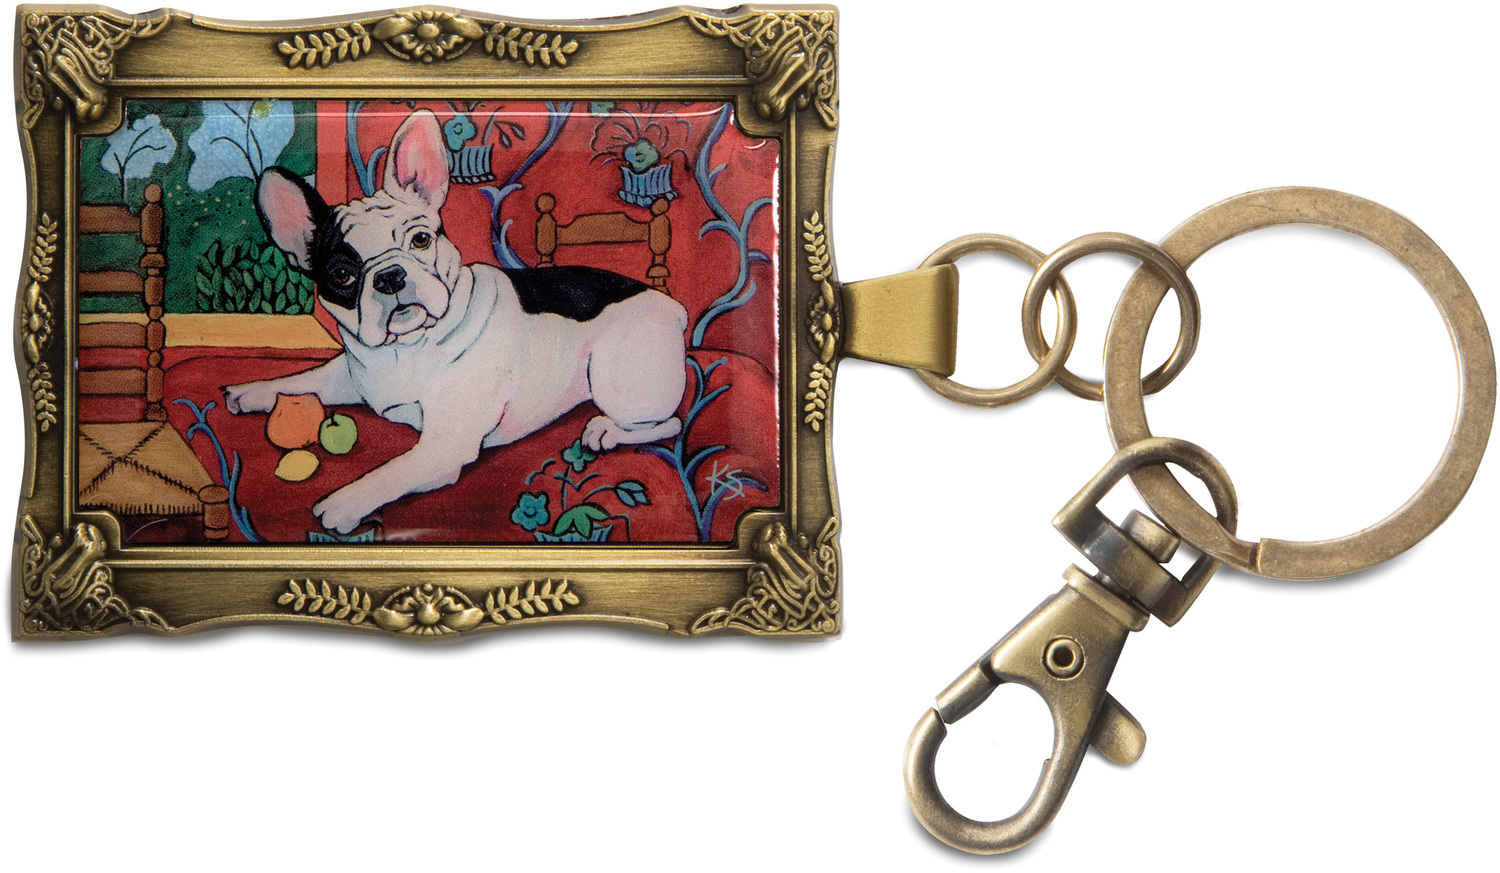 French Bulldog - Muttisse by Paw Palettes - French Bulldog - Muttisse - 2"x 2.75" Key Chain